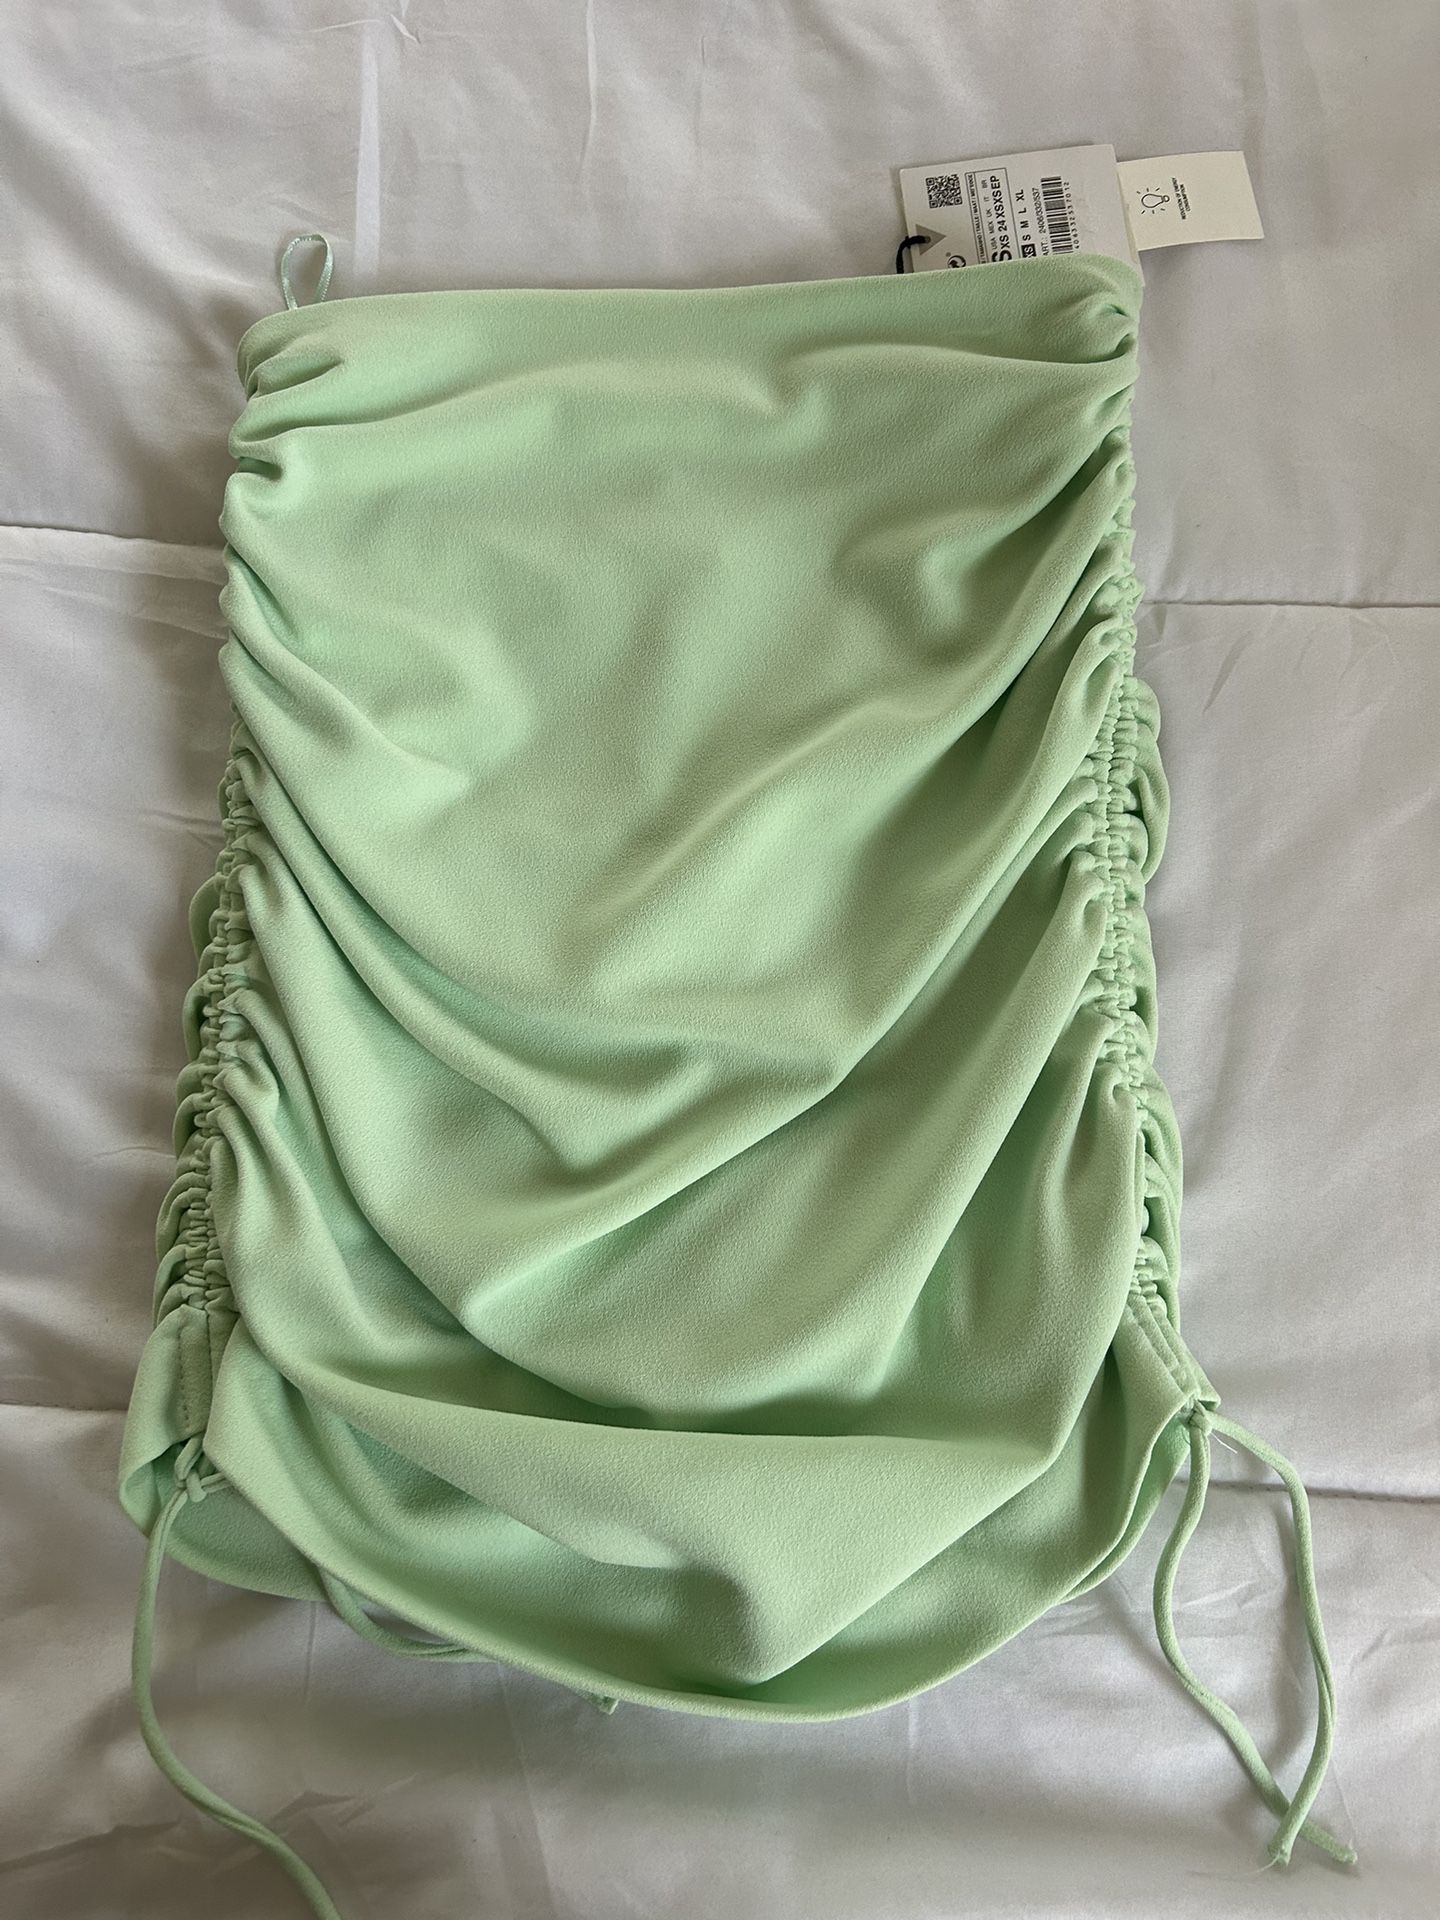 Zara Mini Skirt